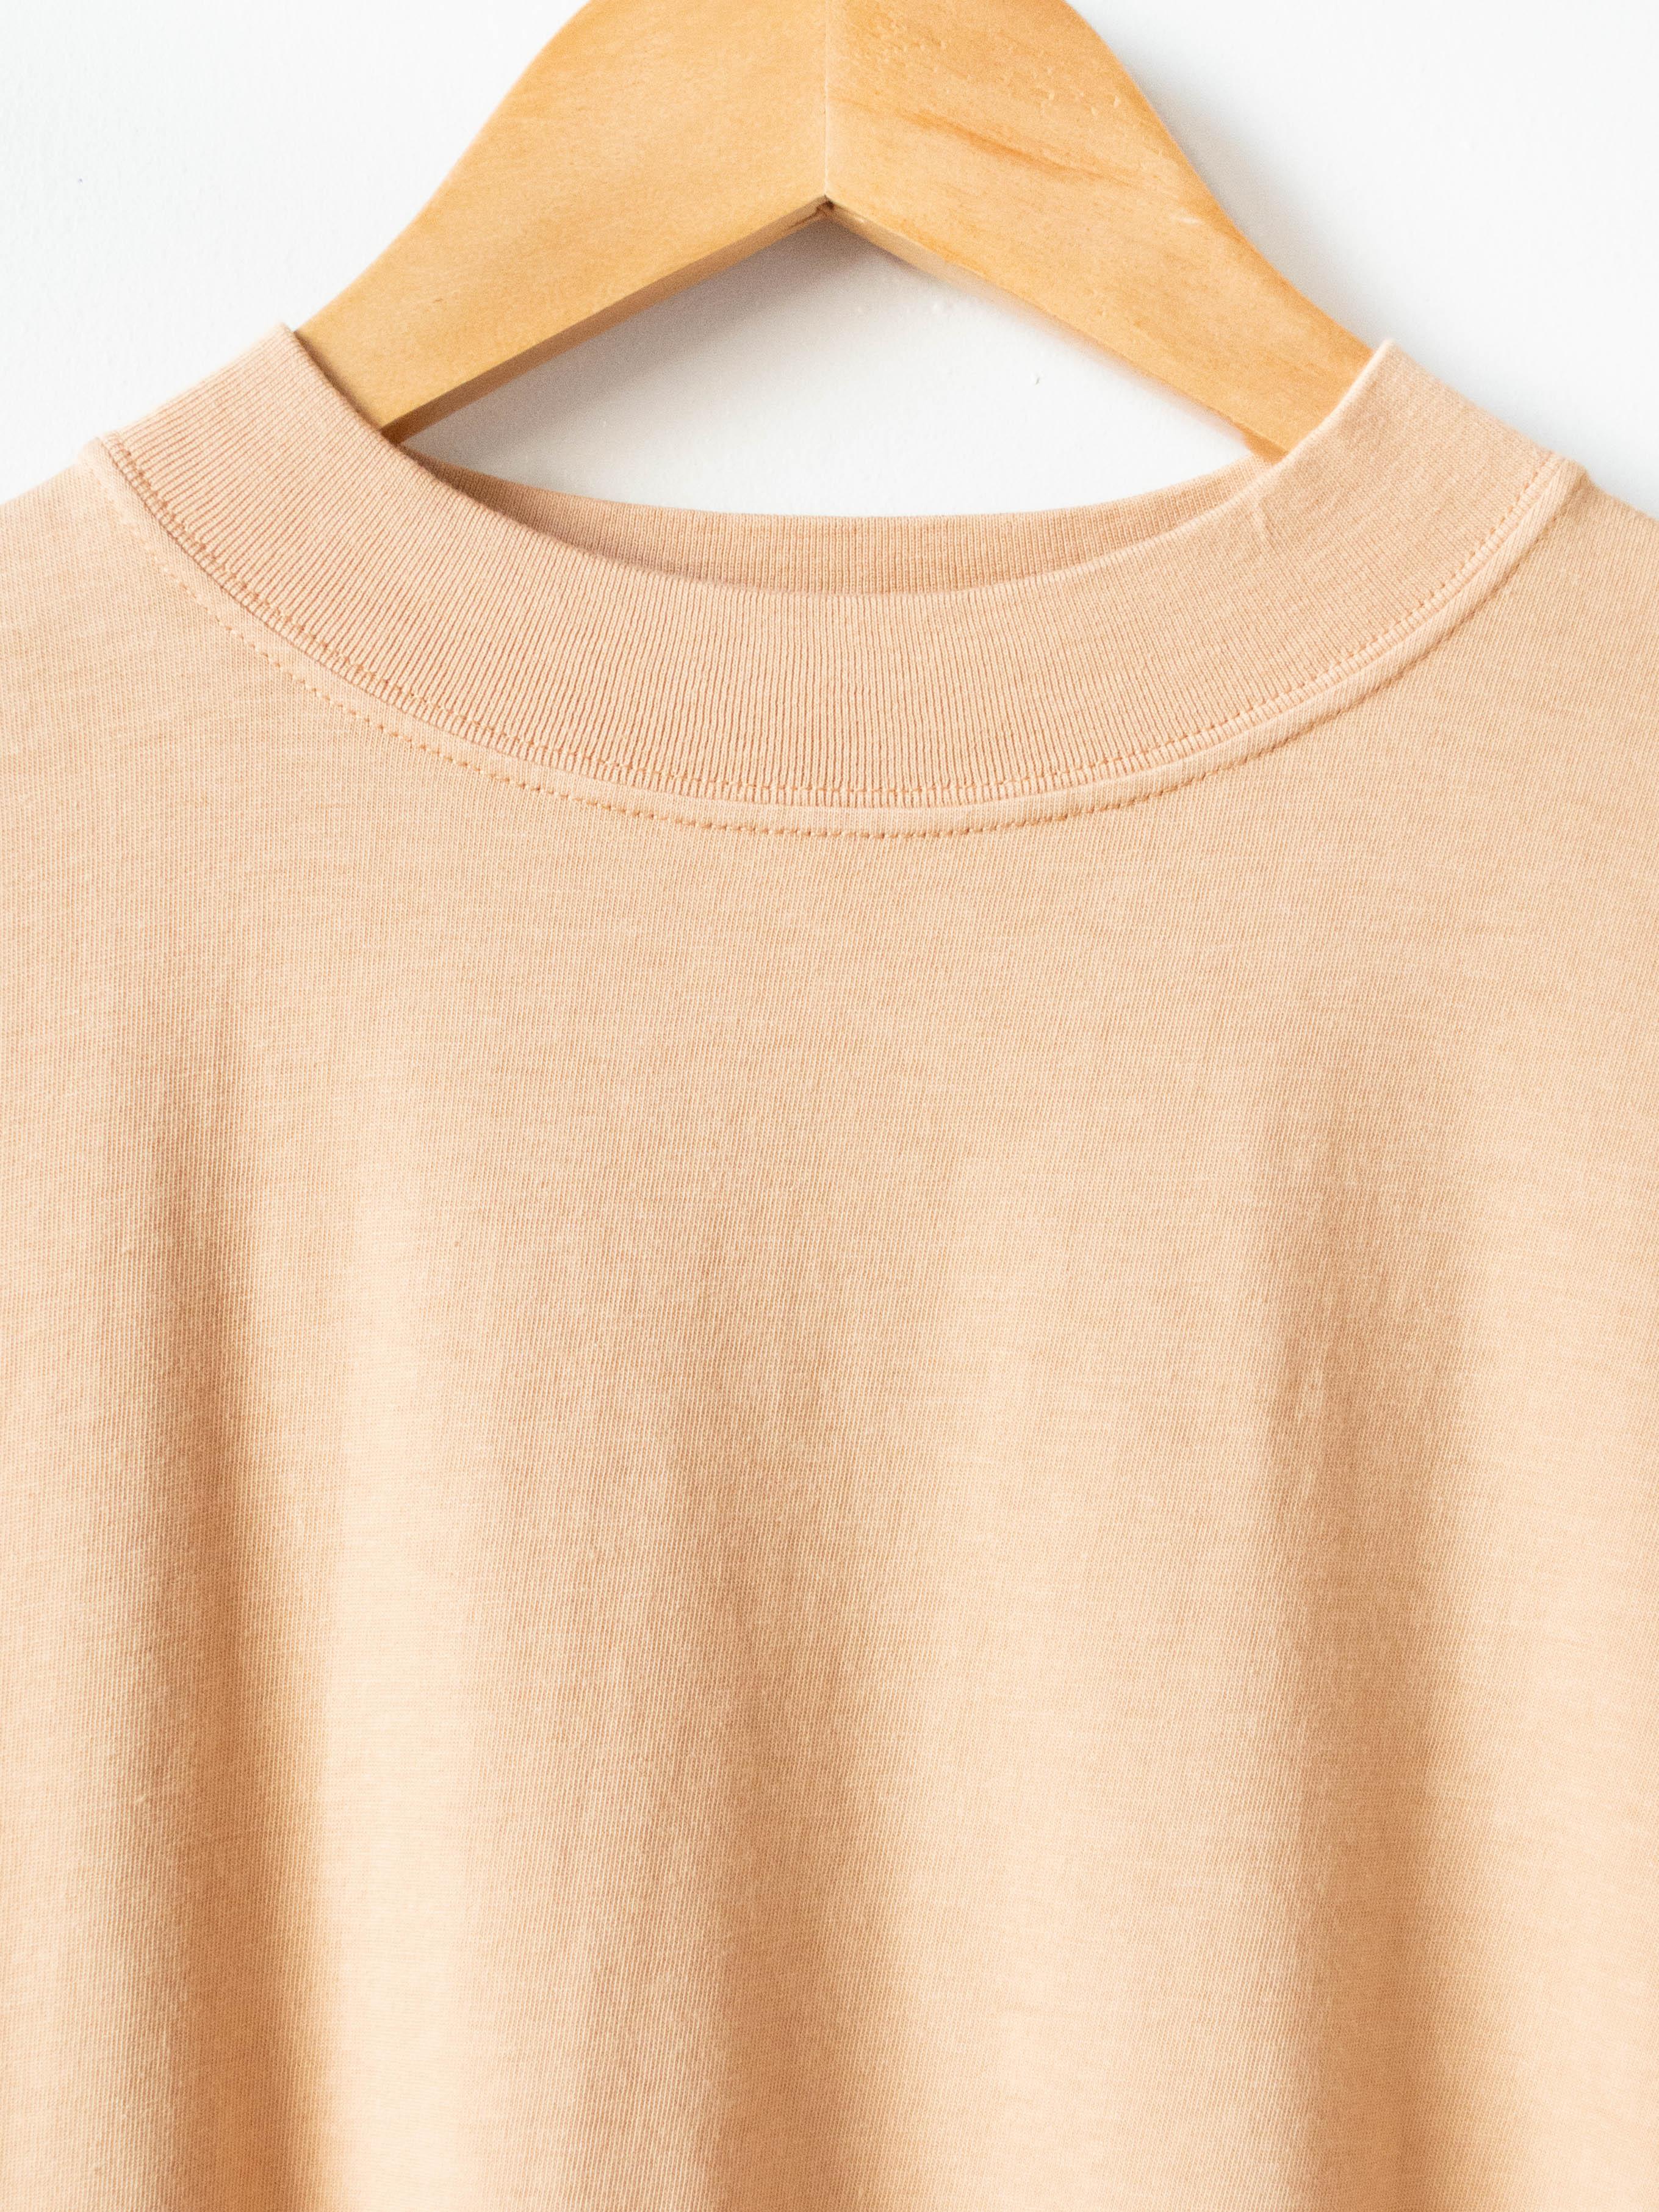 Namu Shop - Phlannel Light Suvin Cotton Half-sleeve T-shirt - Orange